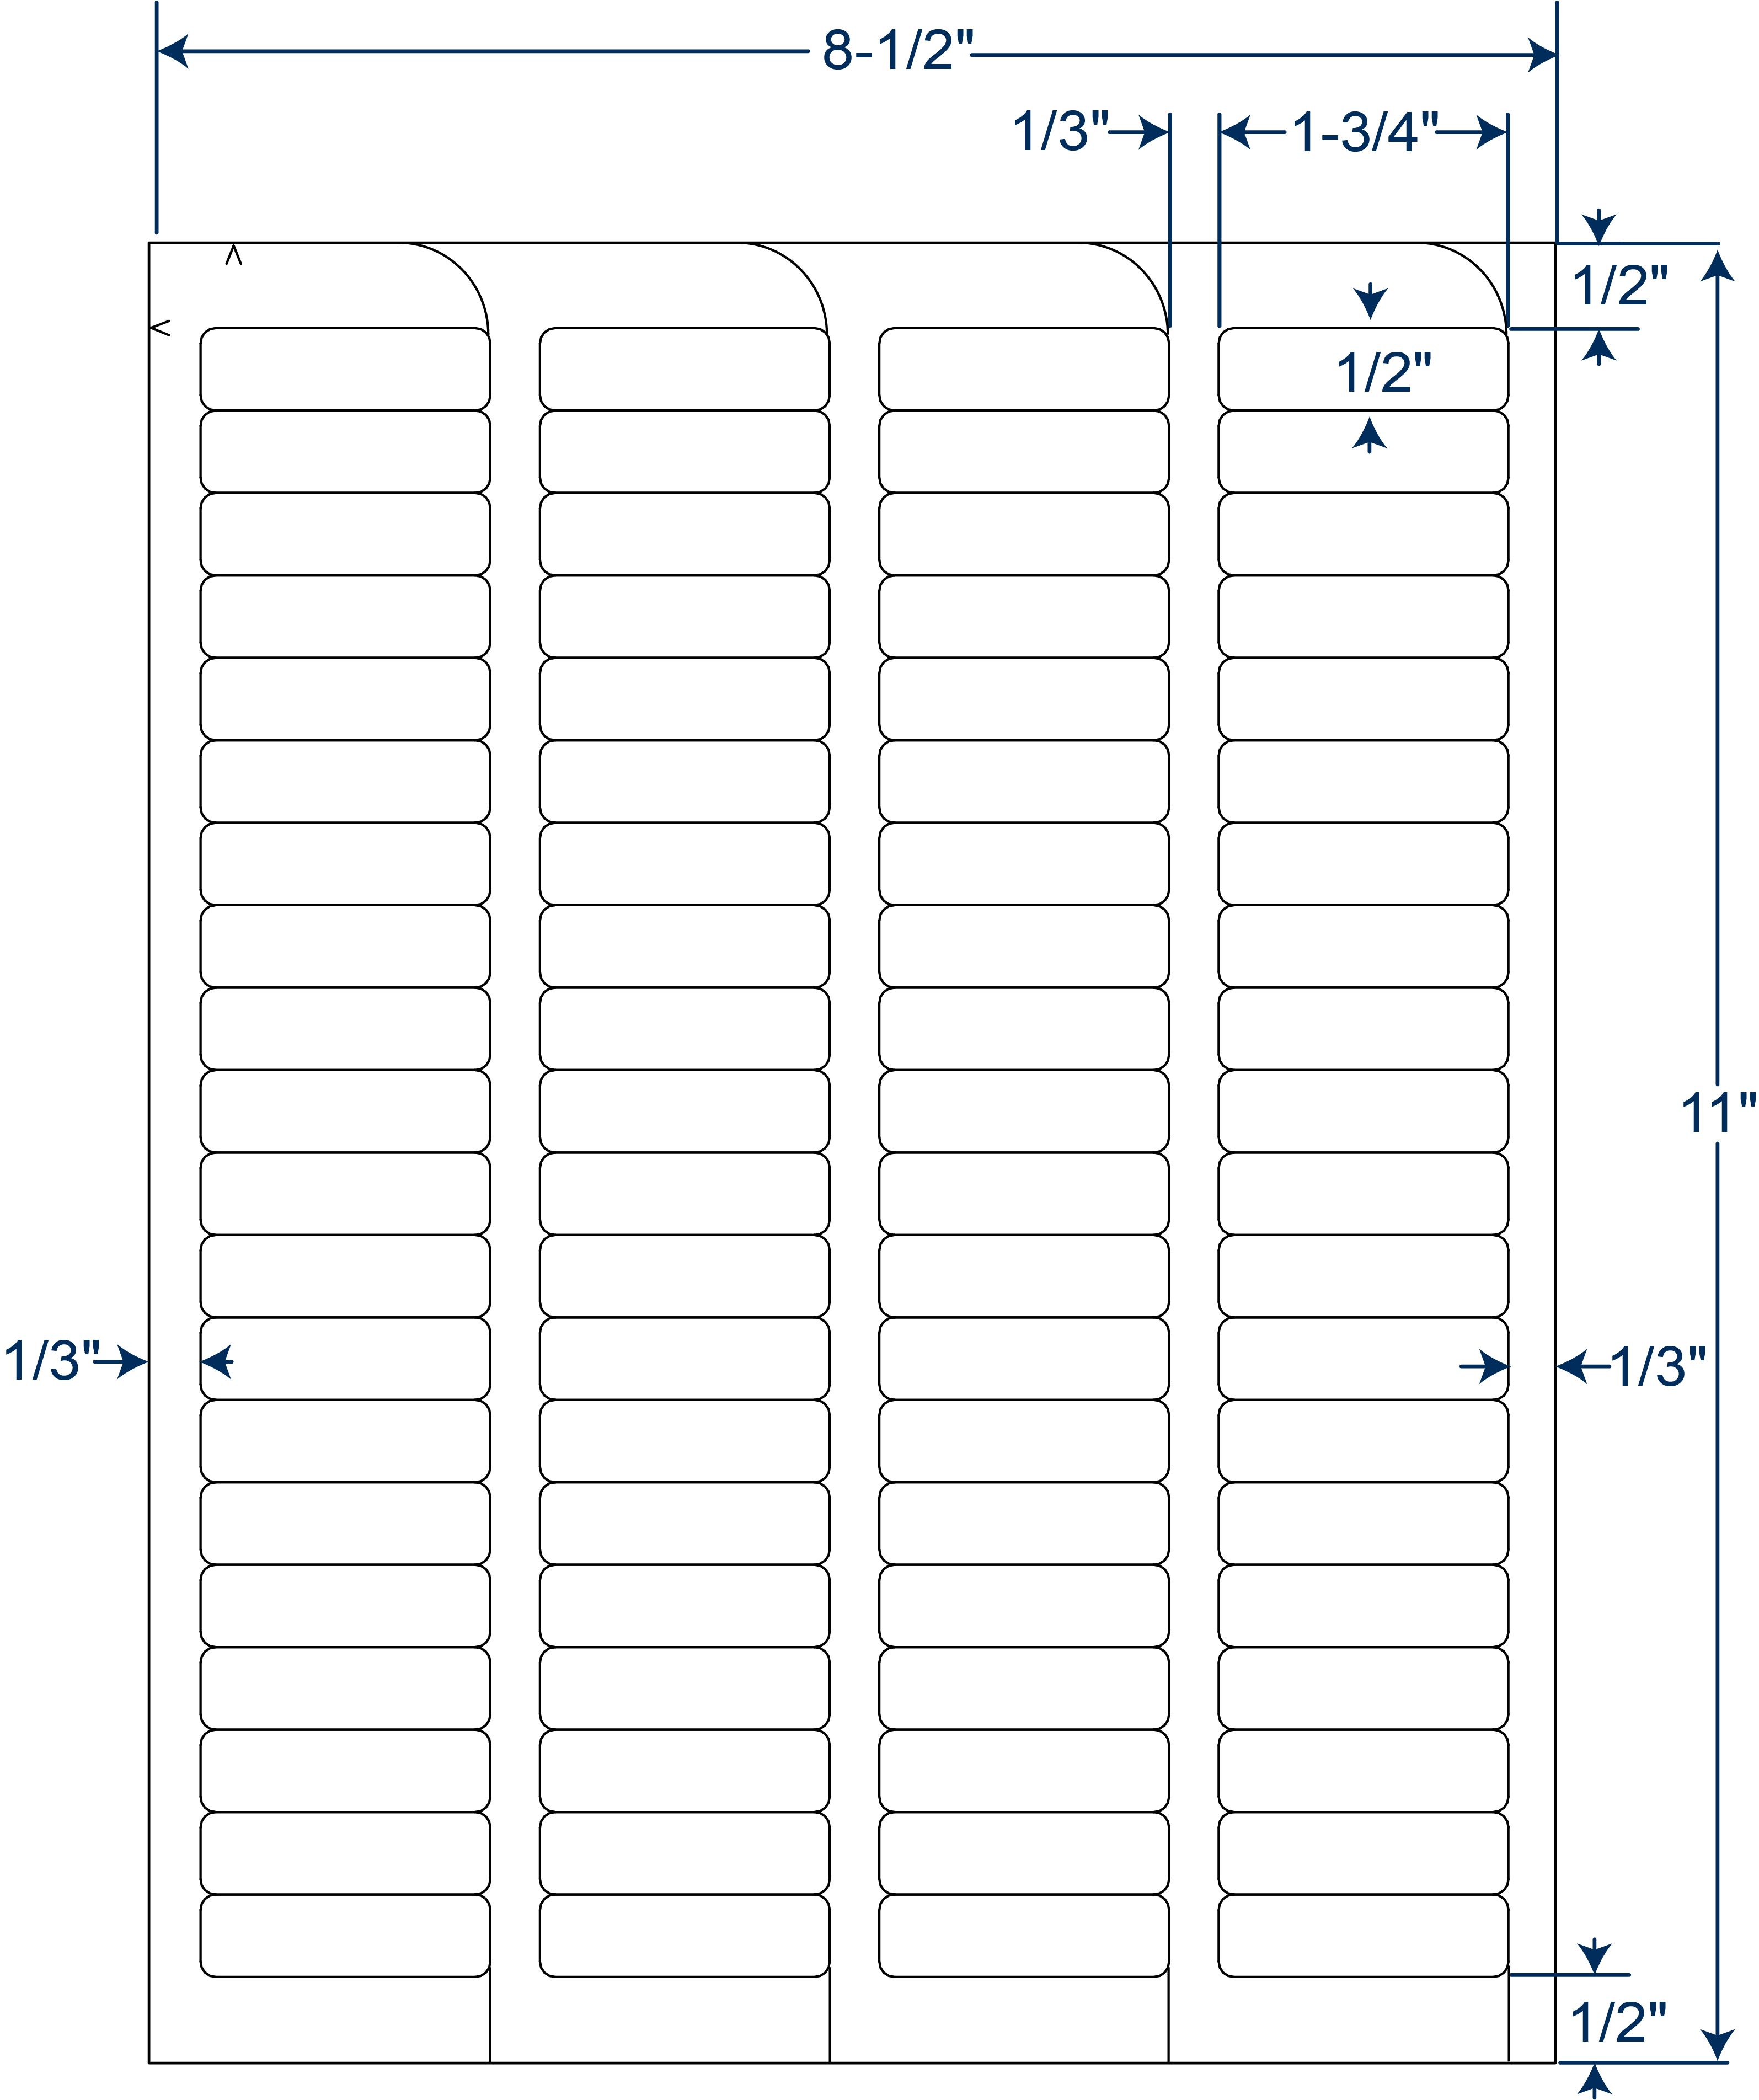 1-3/4" x 1/2" FABTab‰ã¢ Sheeted Labels (1,000 sheets)